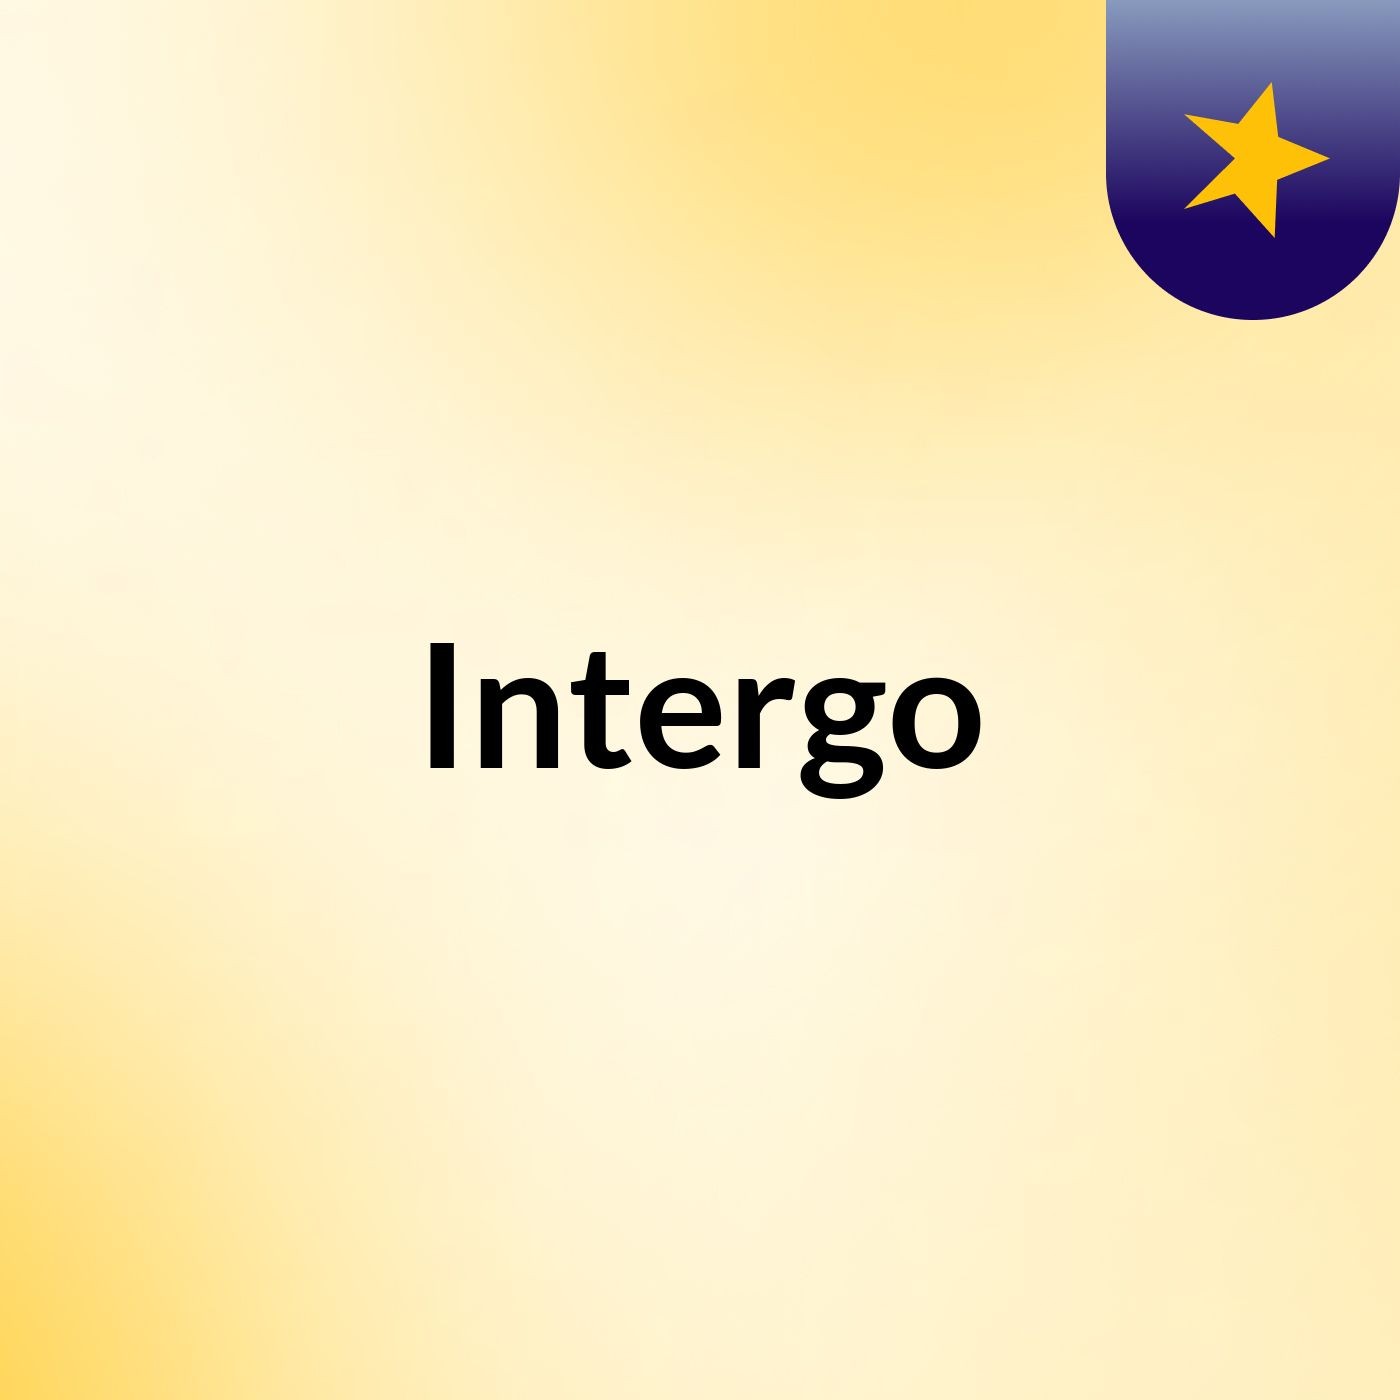 Intergo